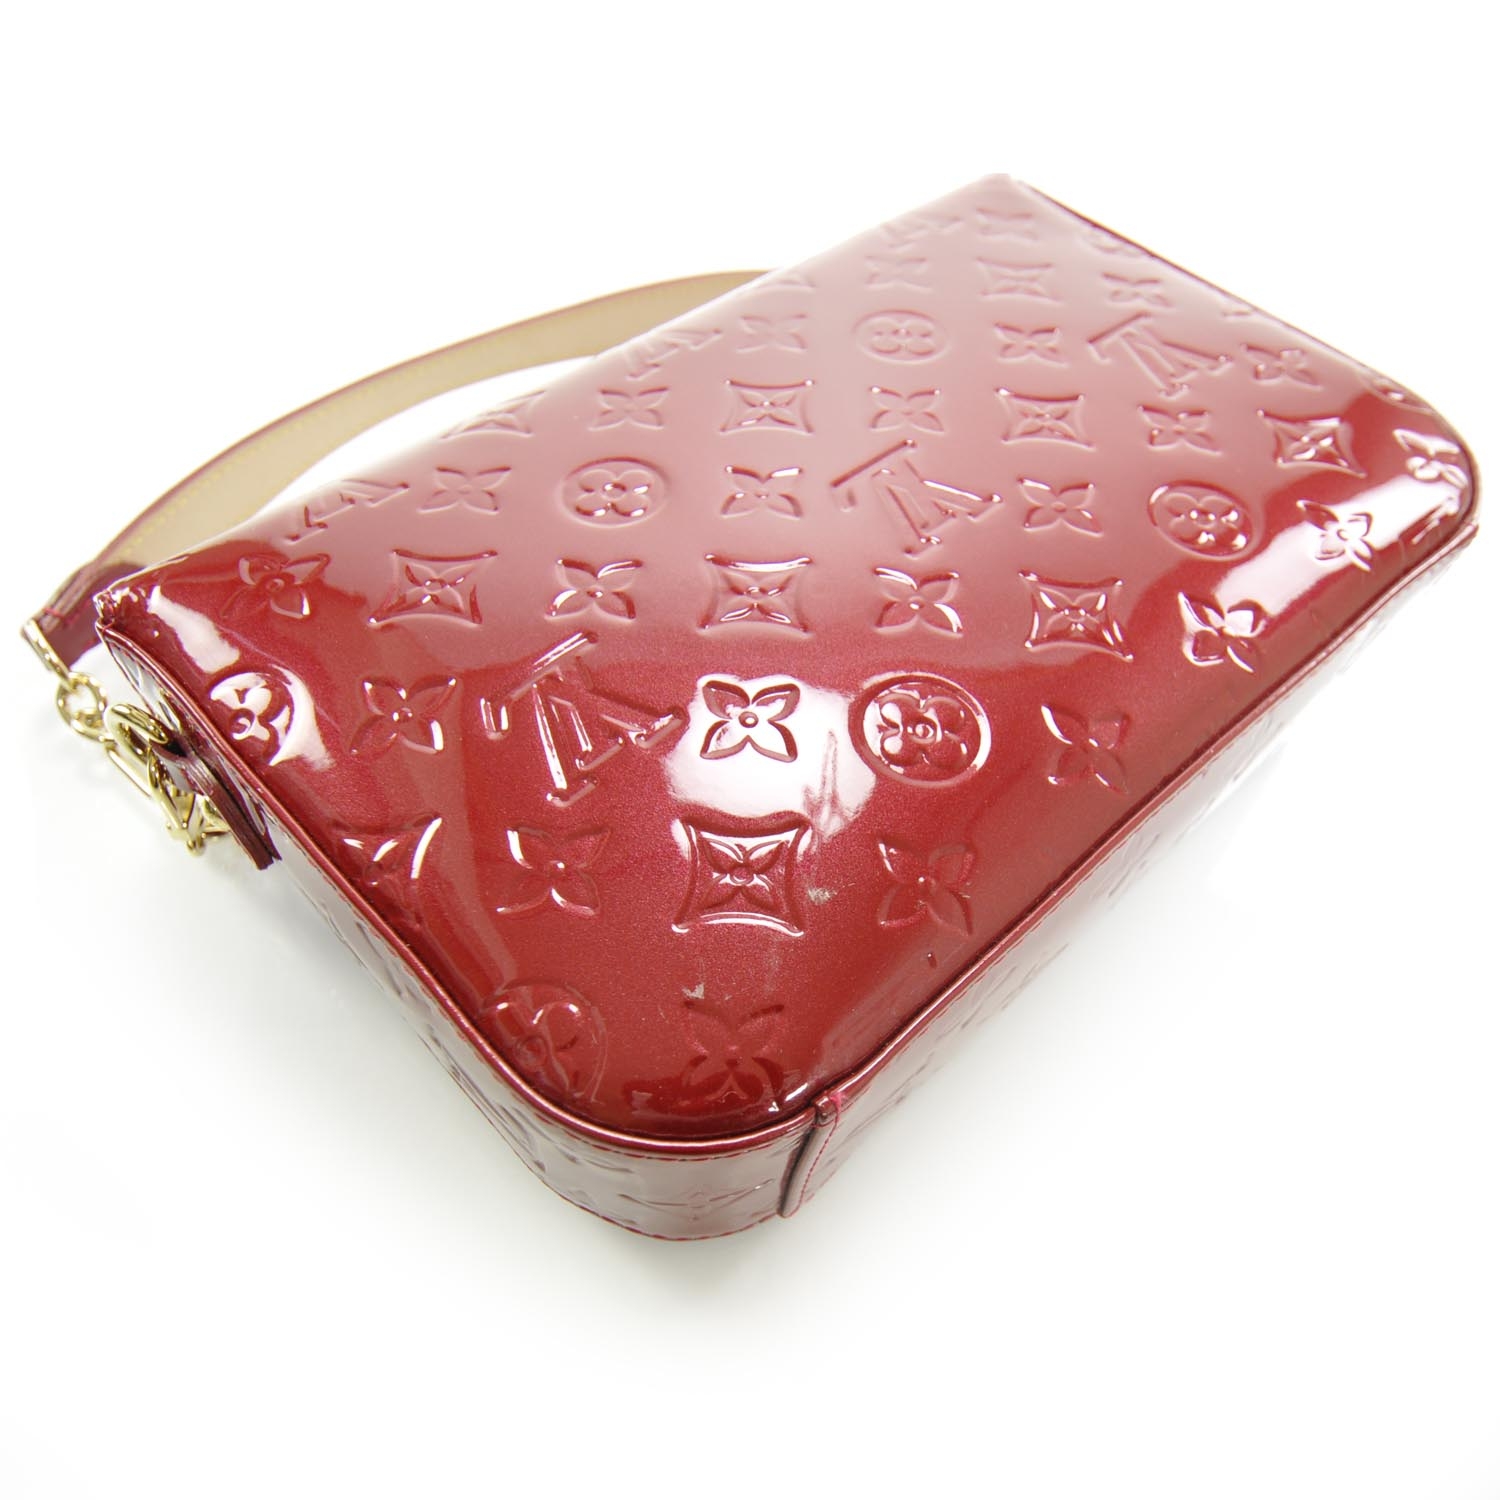 Sold at Auction: Louis Vuitton Amarante Monogram Vernis Summit Drive Handbag